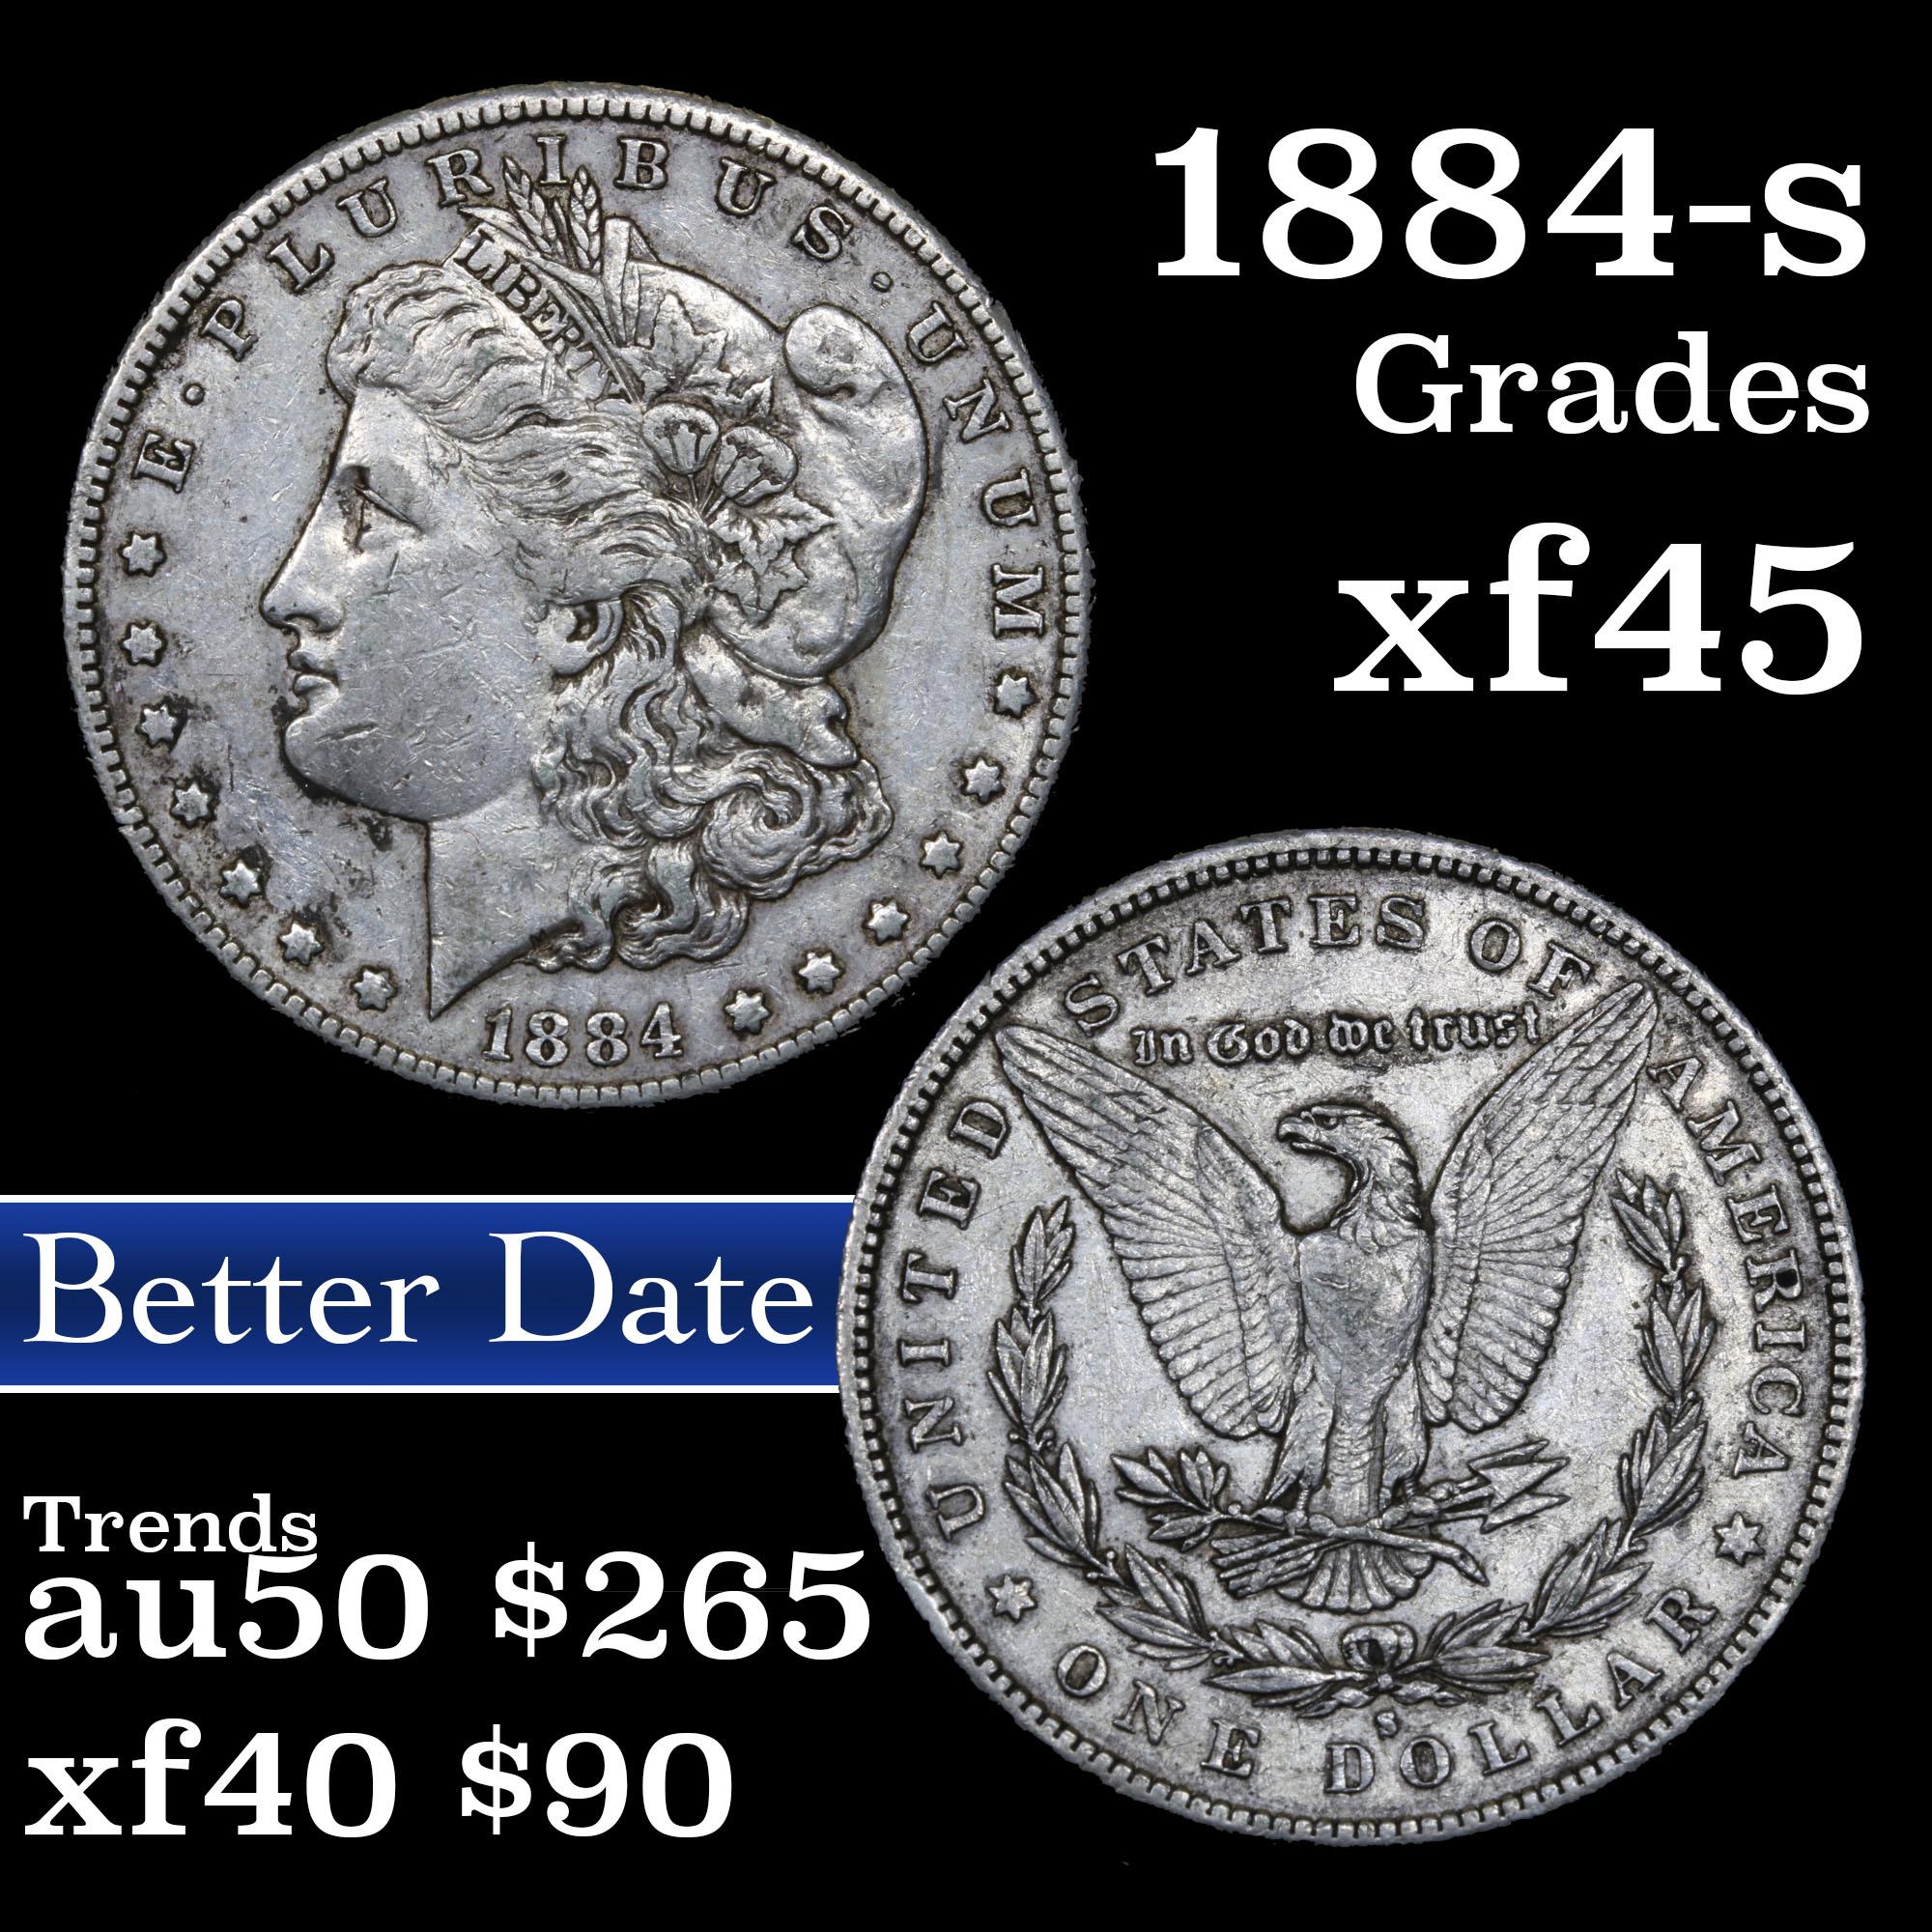 1884-s Morgan Dollar $1 Grades xf+